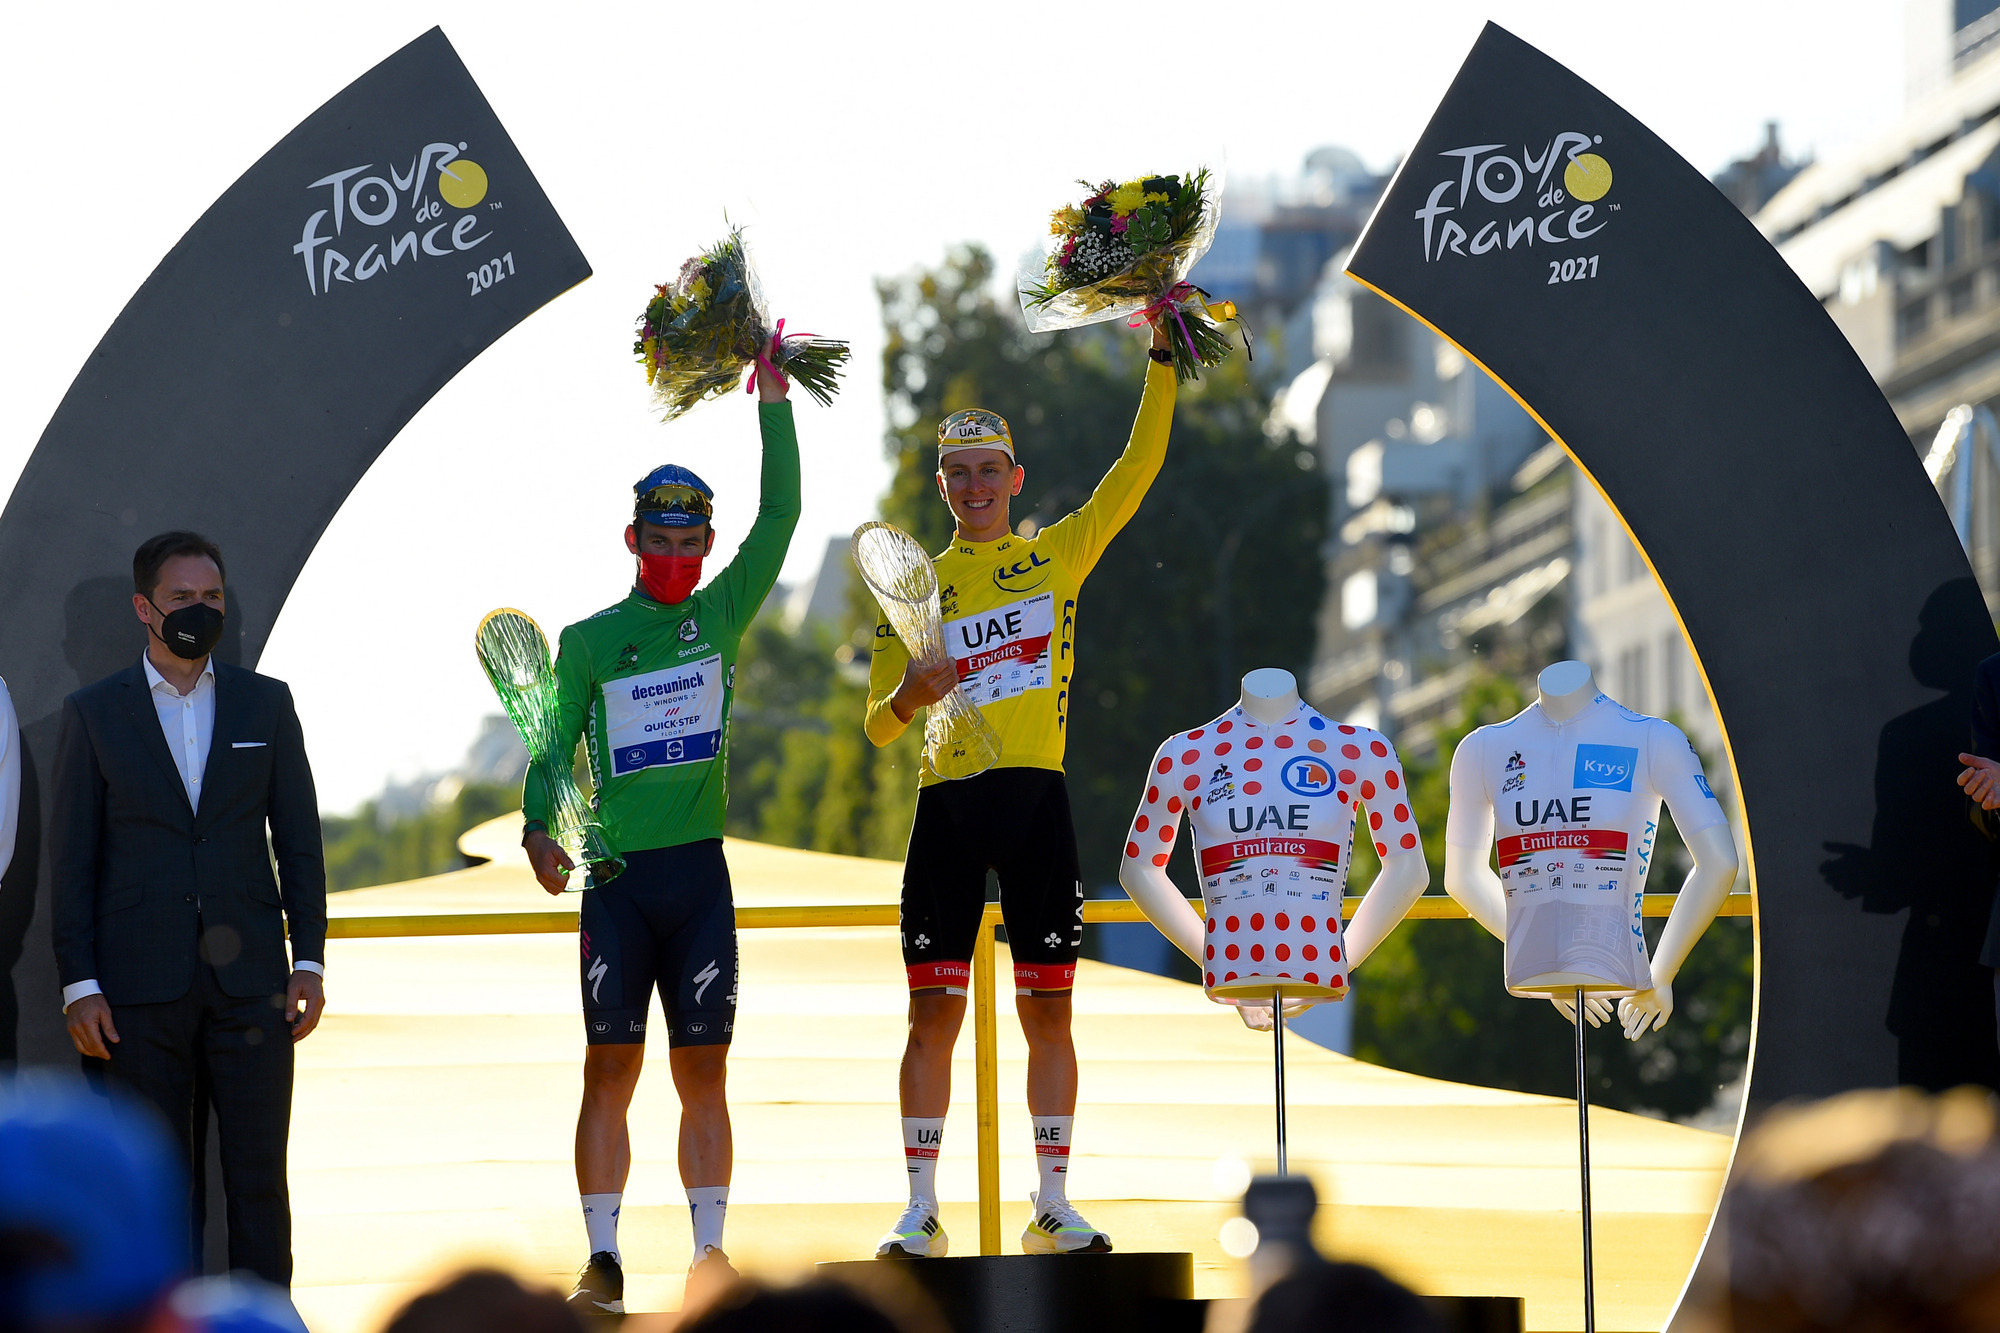 Tour de France Standings at the 2021 race Cyclingnews